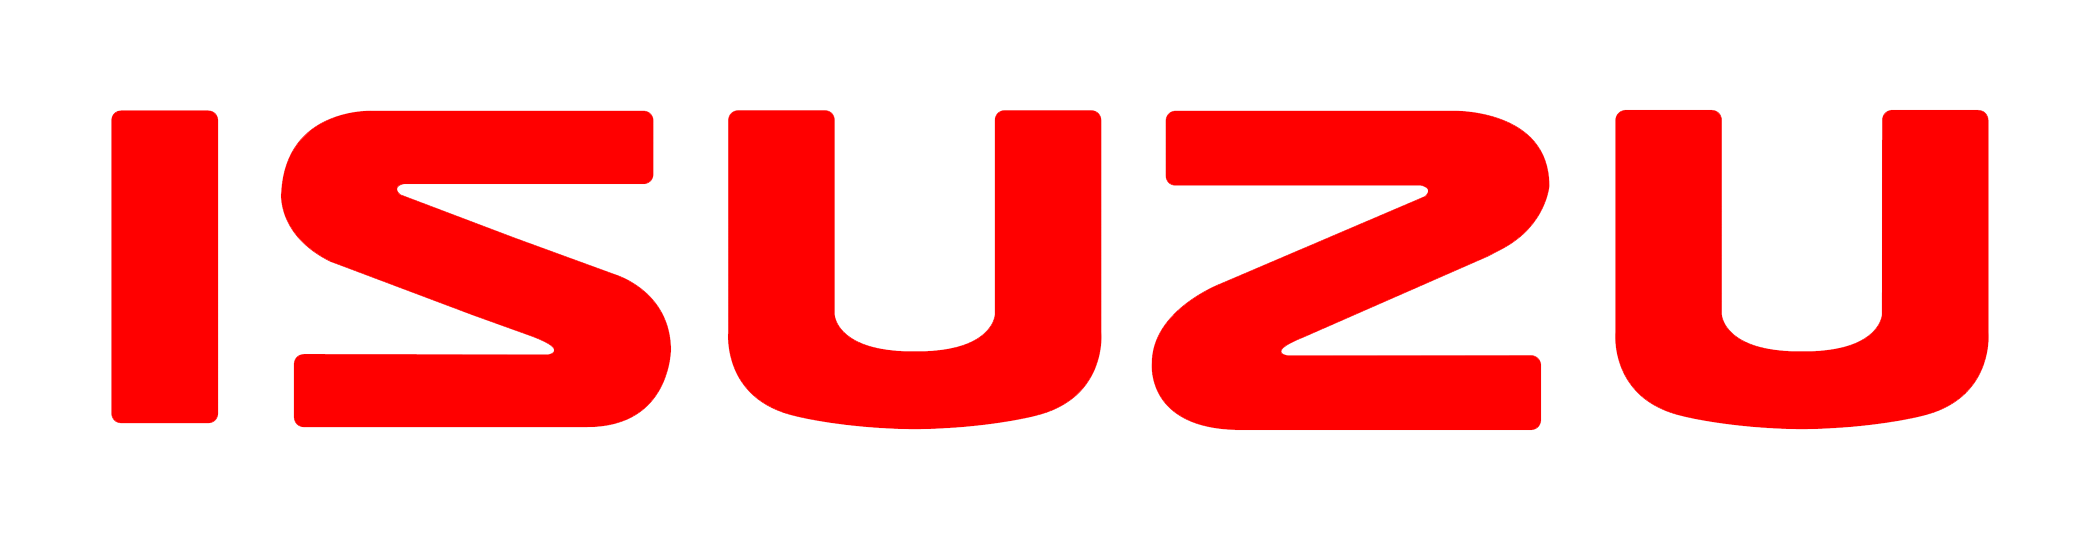 Isuzu Logo PNG HQ Pic